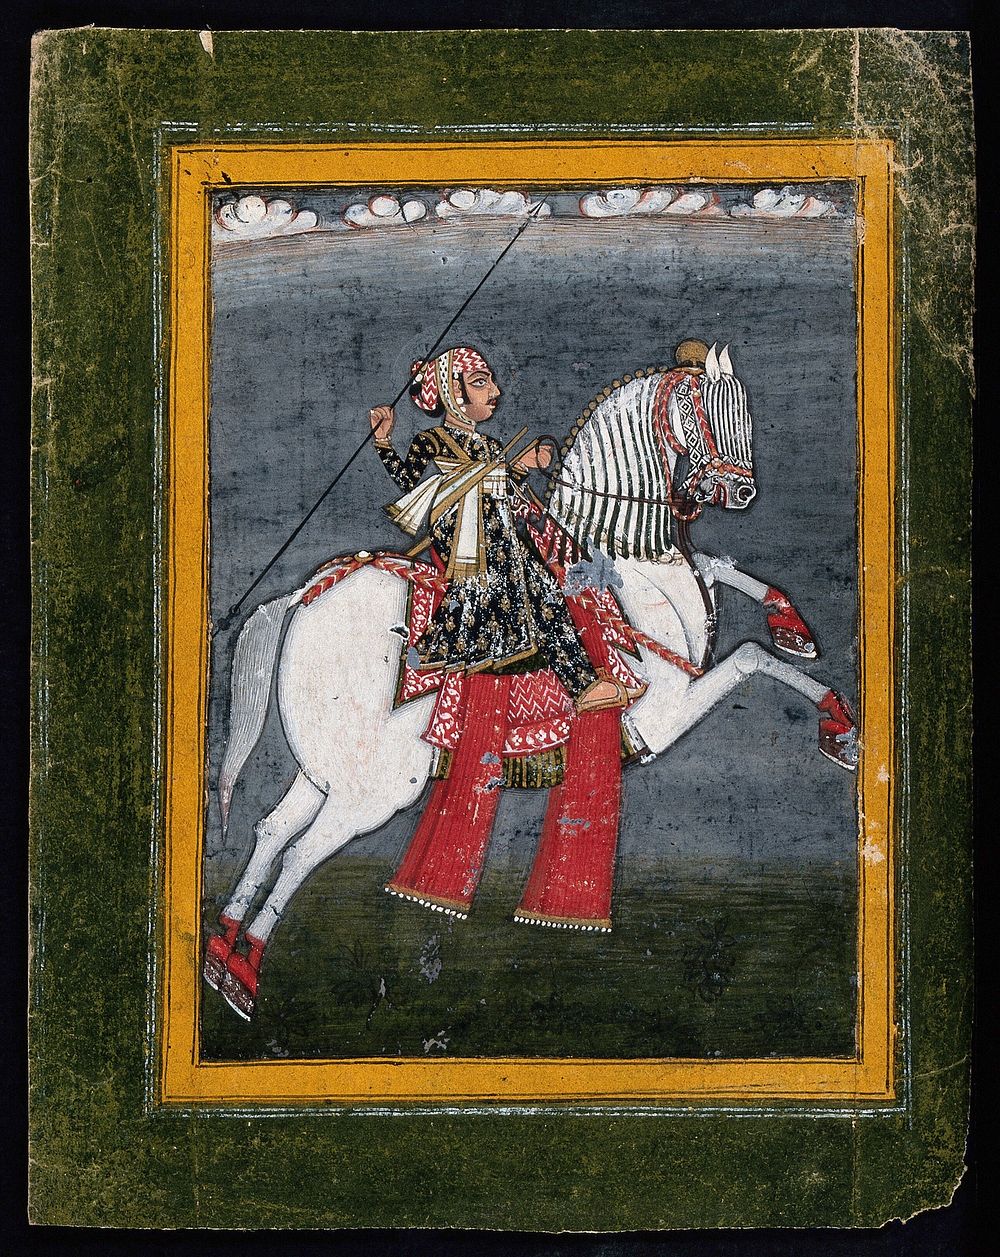 A Rajput warrior riding a horse . Gouache painting by an Indian painter.